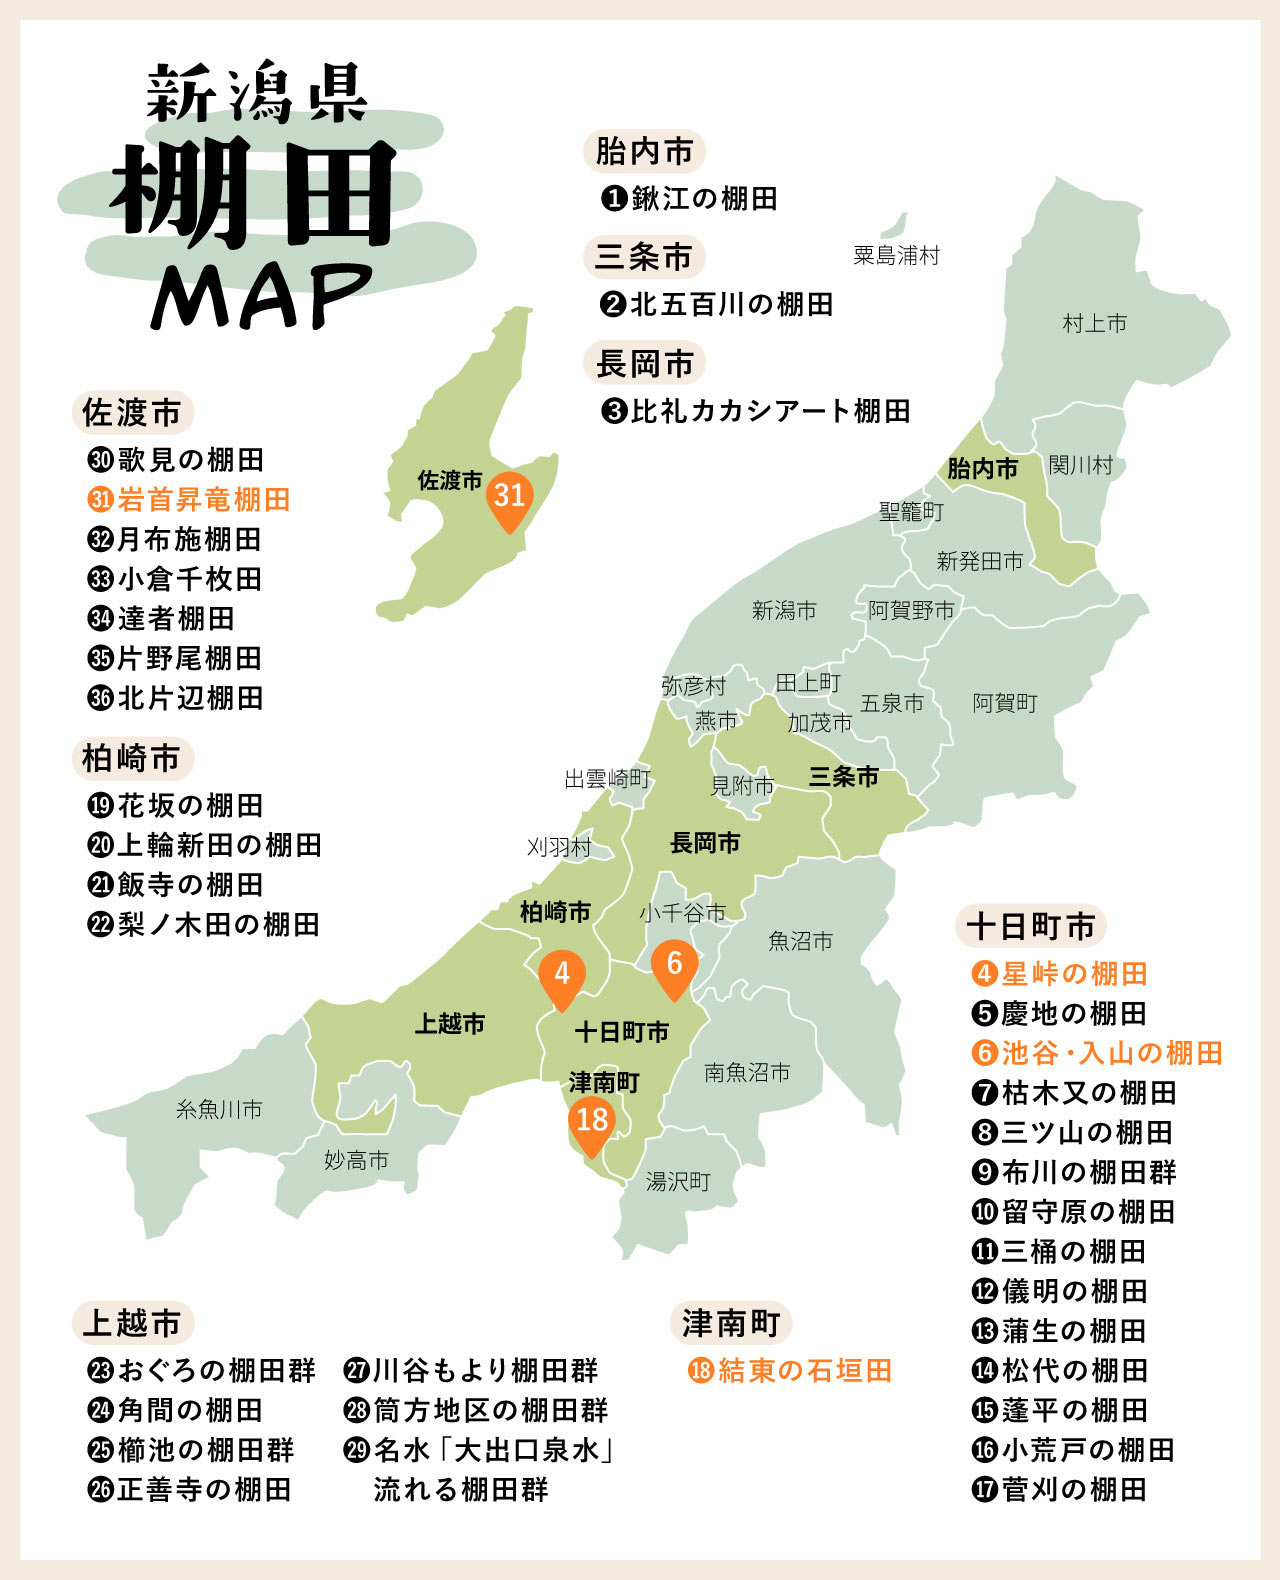 新潟県棚田MAP